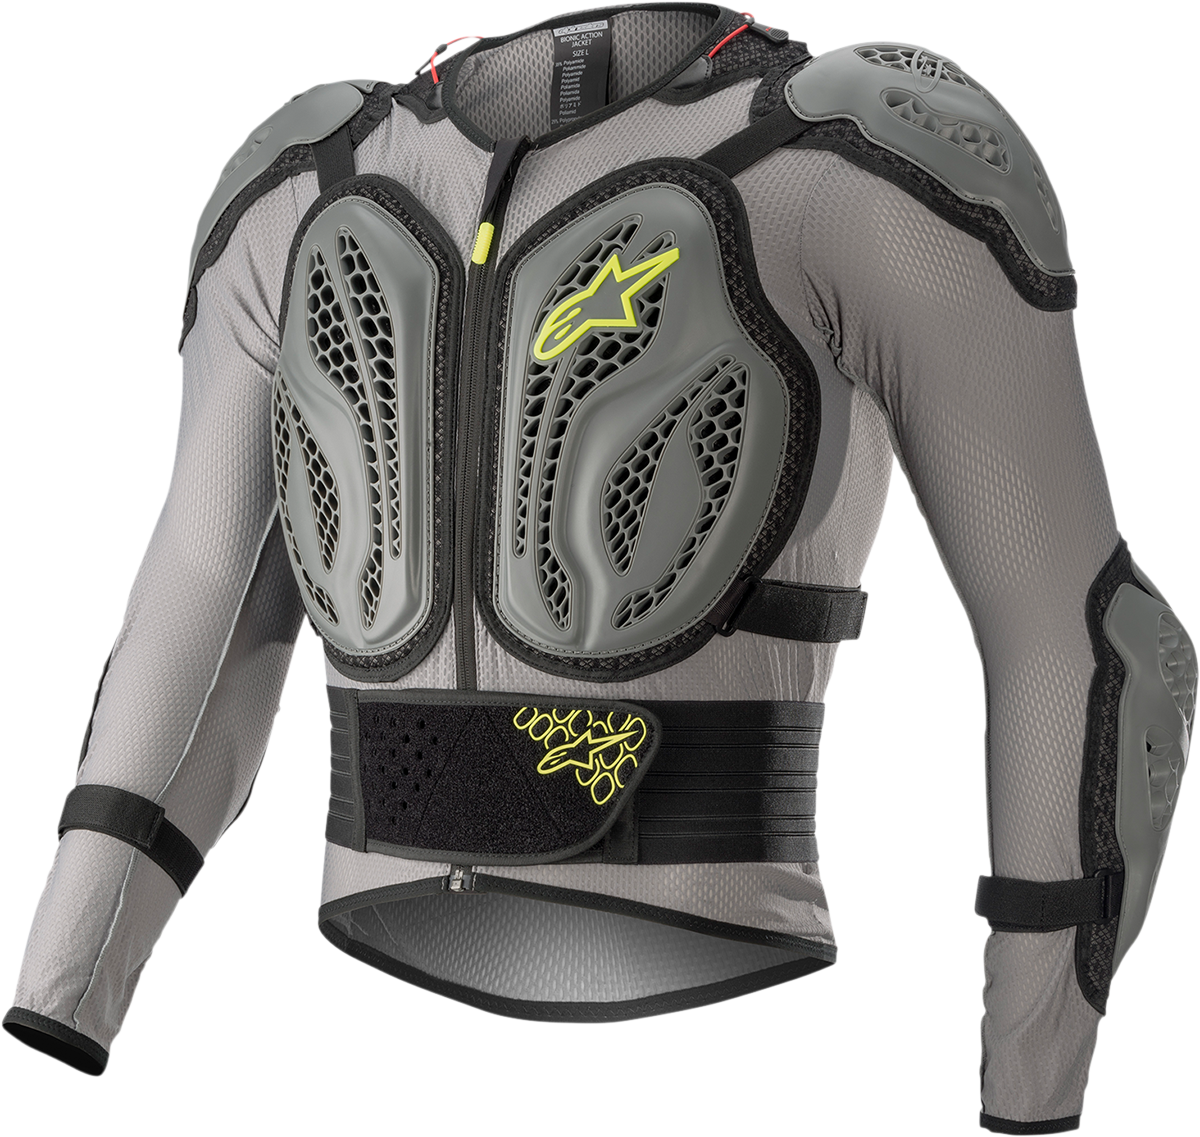 ALPINESTARS Bionic Action Jacket - Gray/Yellow - Medium 6506818-9355-M